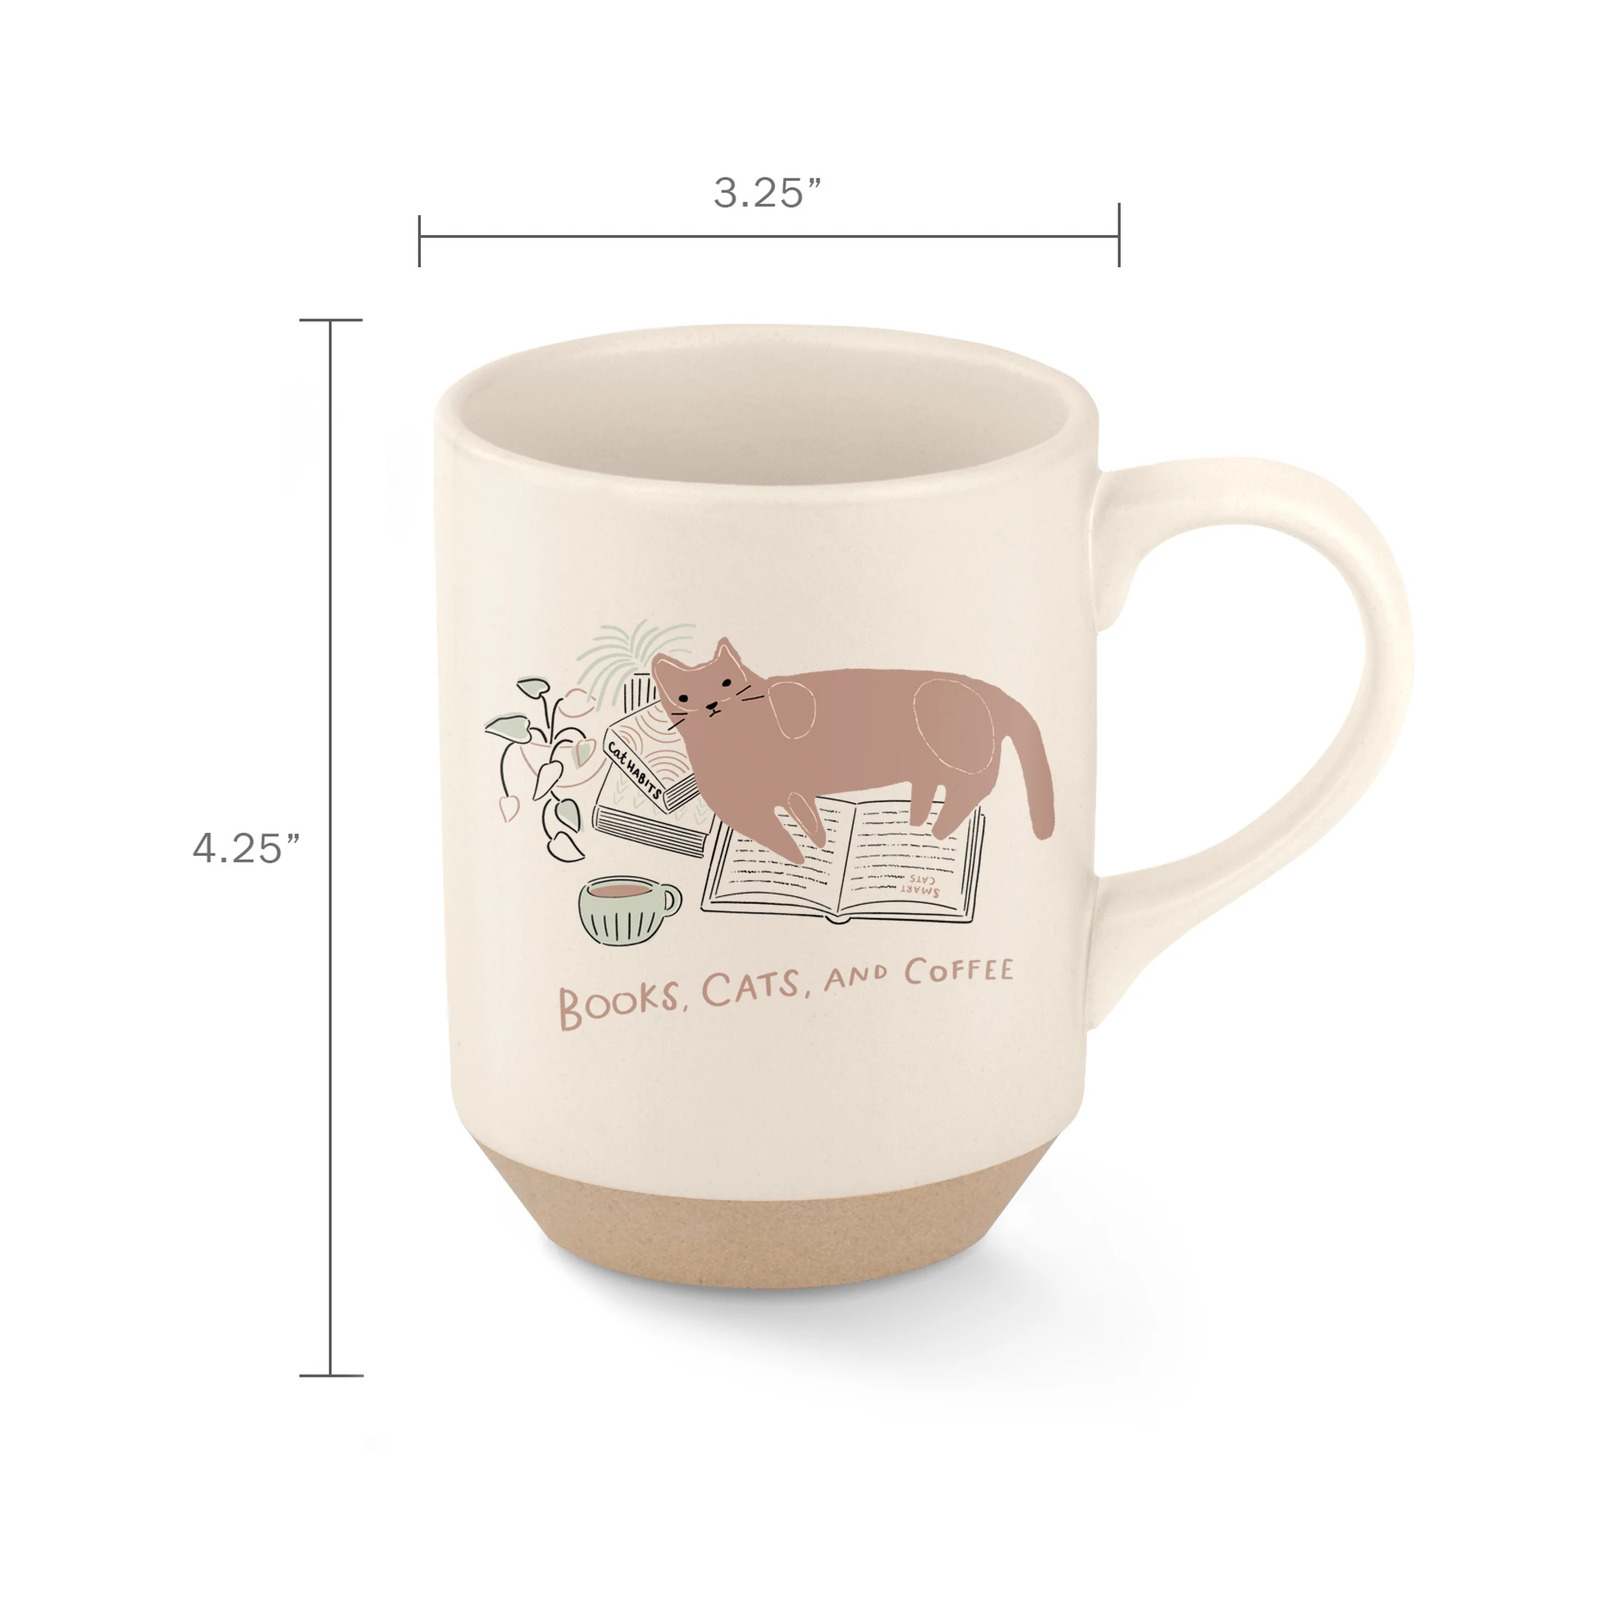 Fringe Studio Stoneware Tea or Coffee Mug - Cat & New York Times image 1